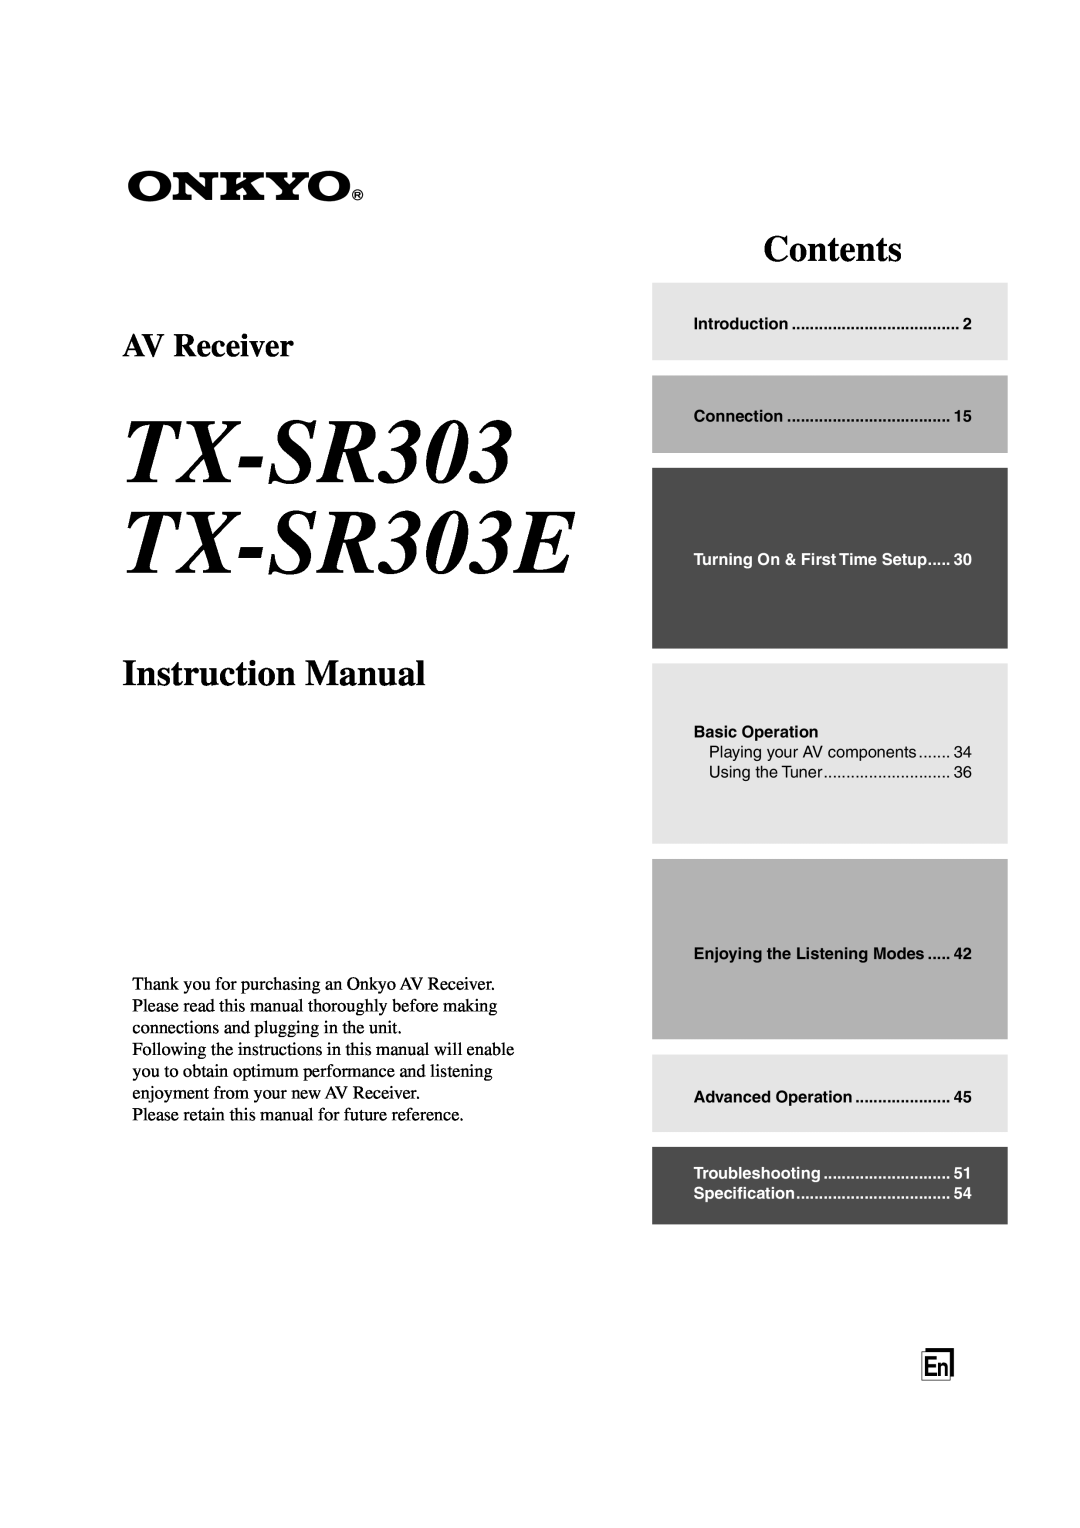 Onkyo instruction manual TX-SR303 TX-SR303E, Contents, AV Receiver 